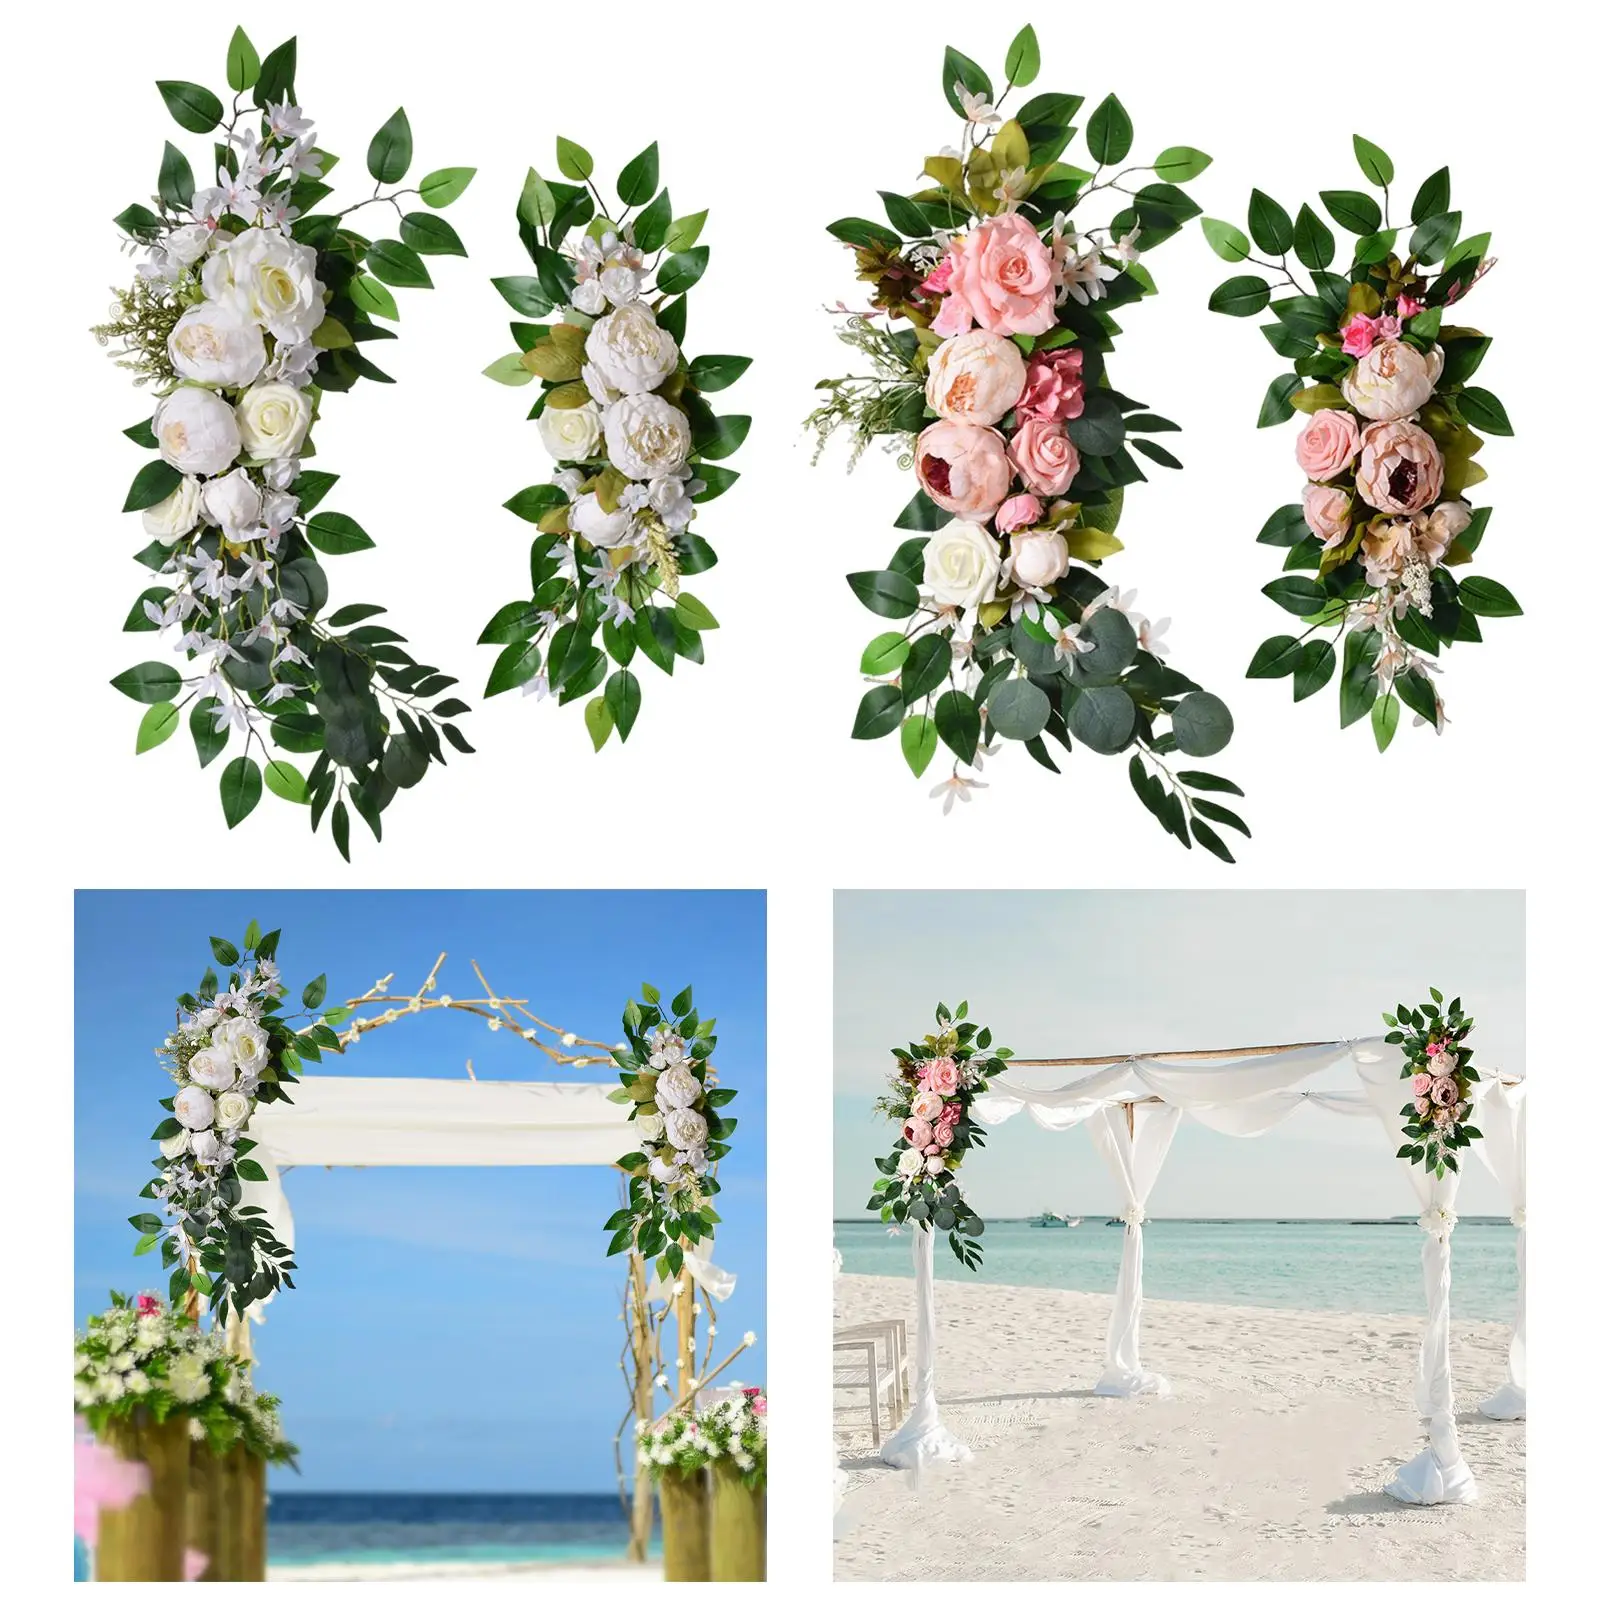 2 Pieces Handmade Wedding Arch Flower Decorative Arch Floral Arrangement for Table